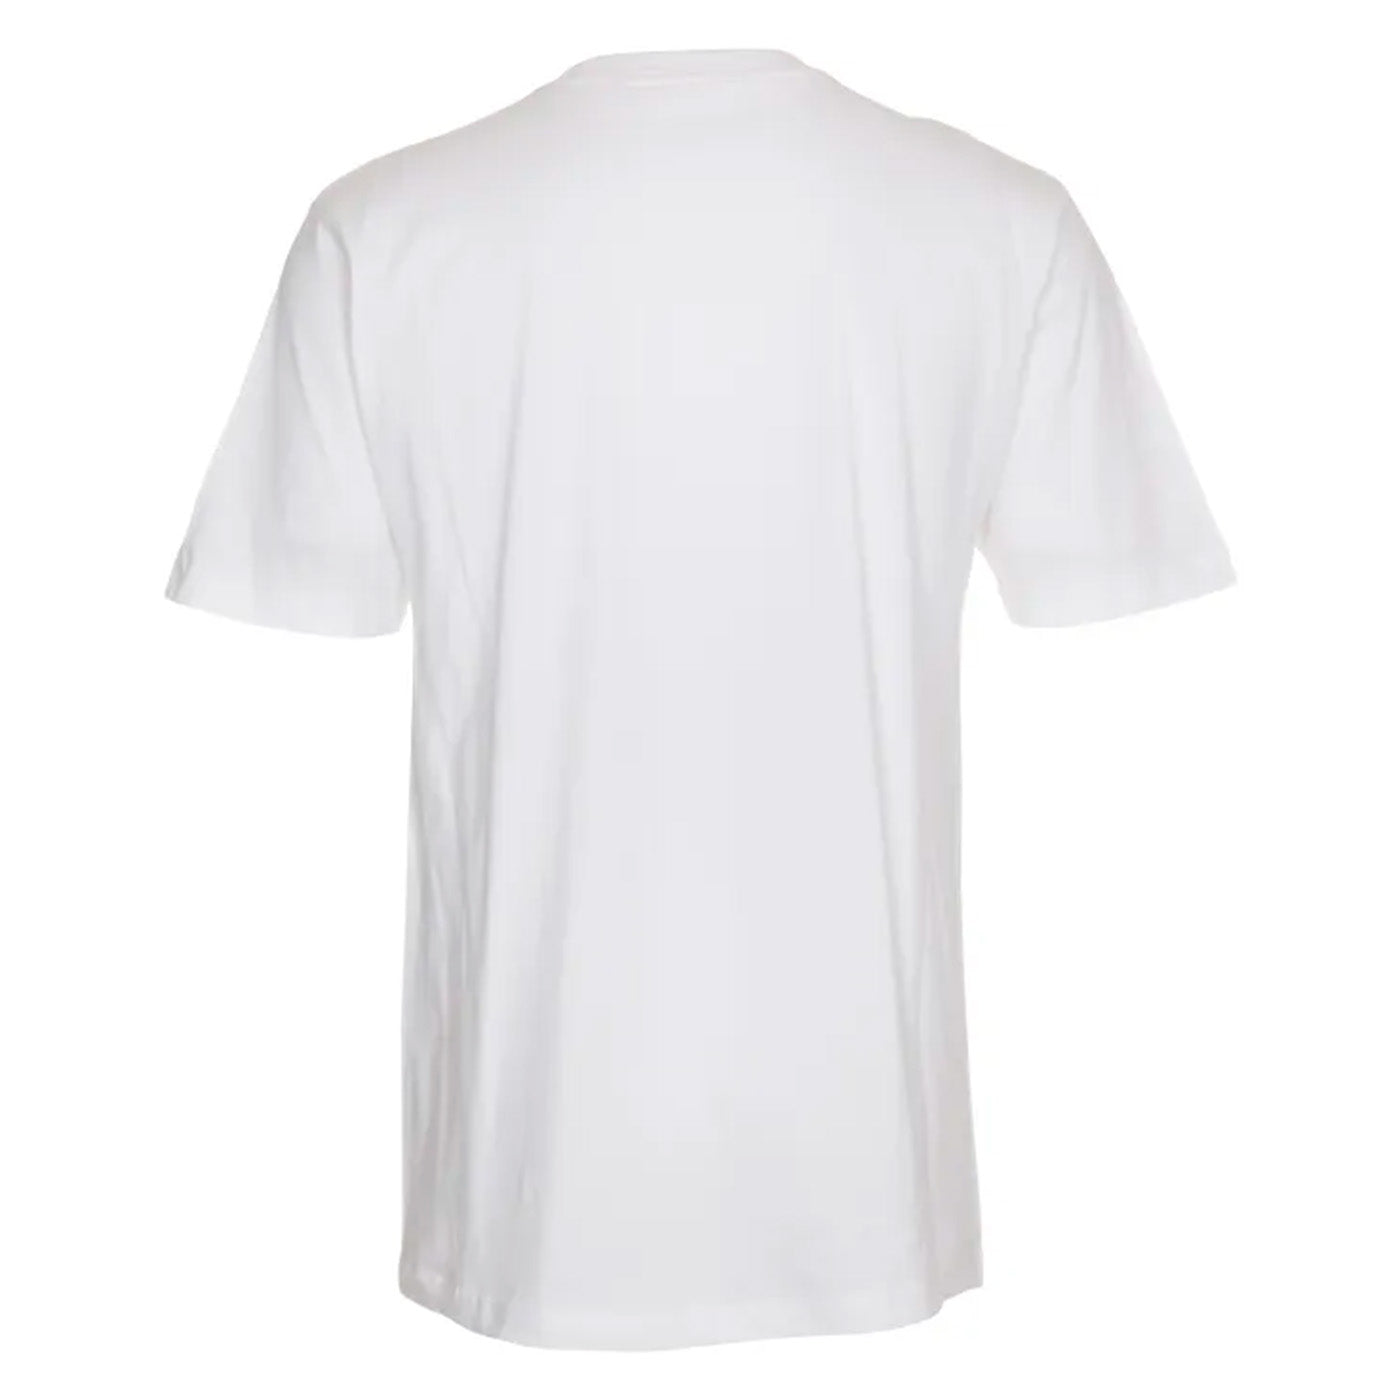 Football Dude T-shirt, White, Kids